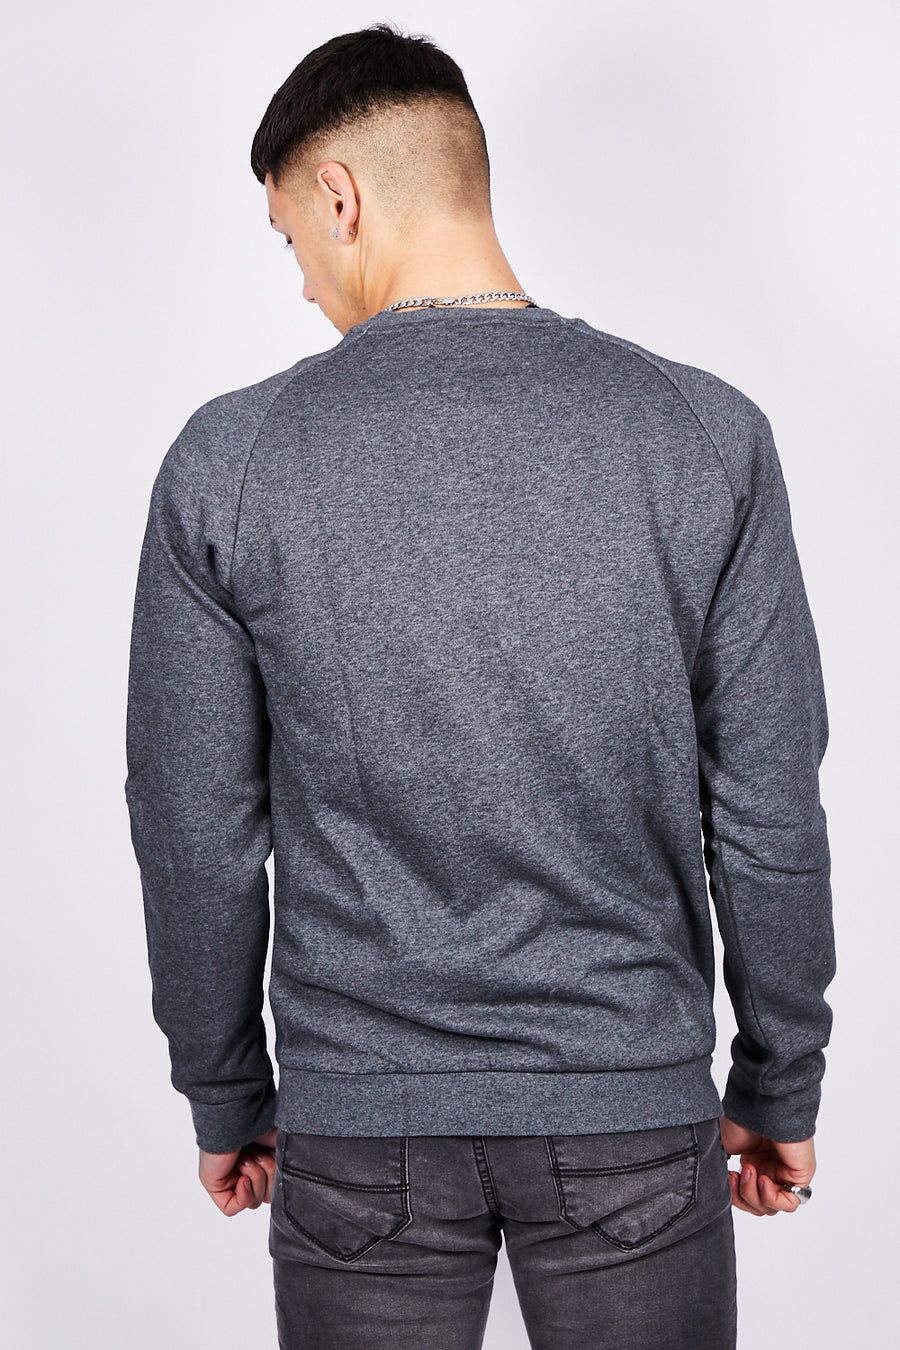 Adidas Core 18 Sweatshirt - Grey